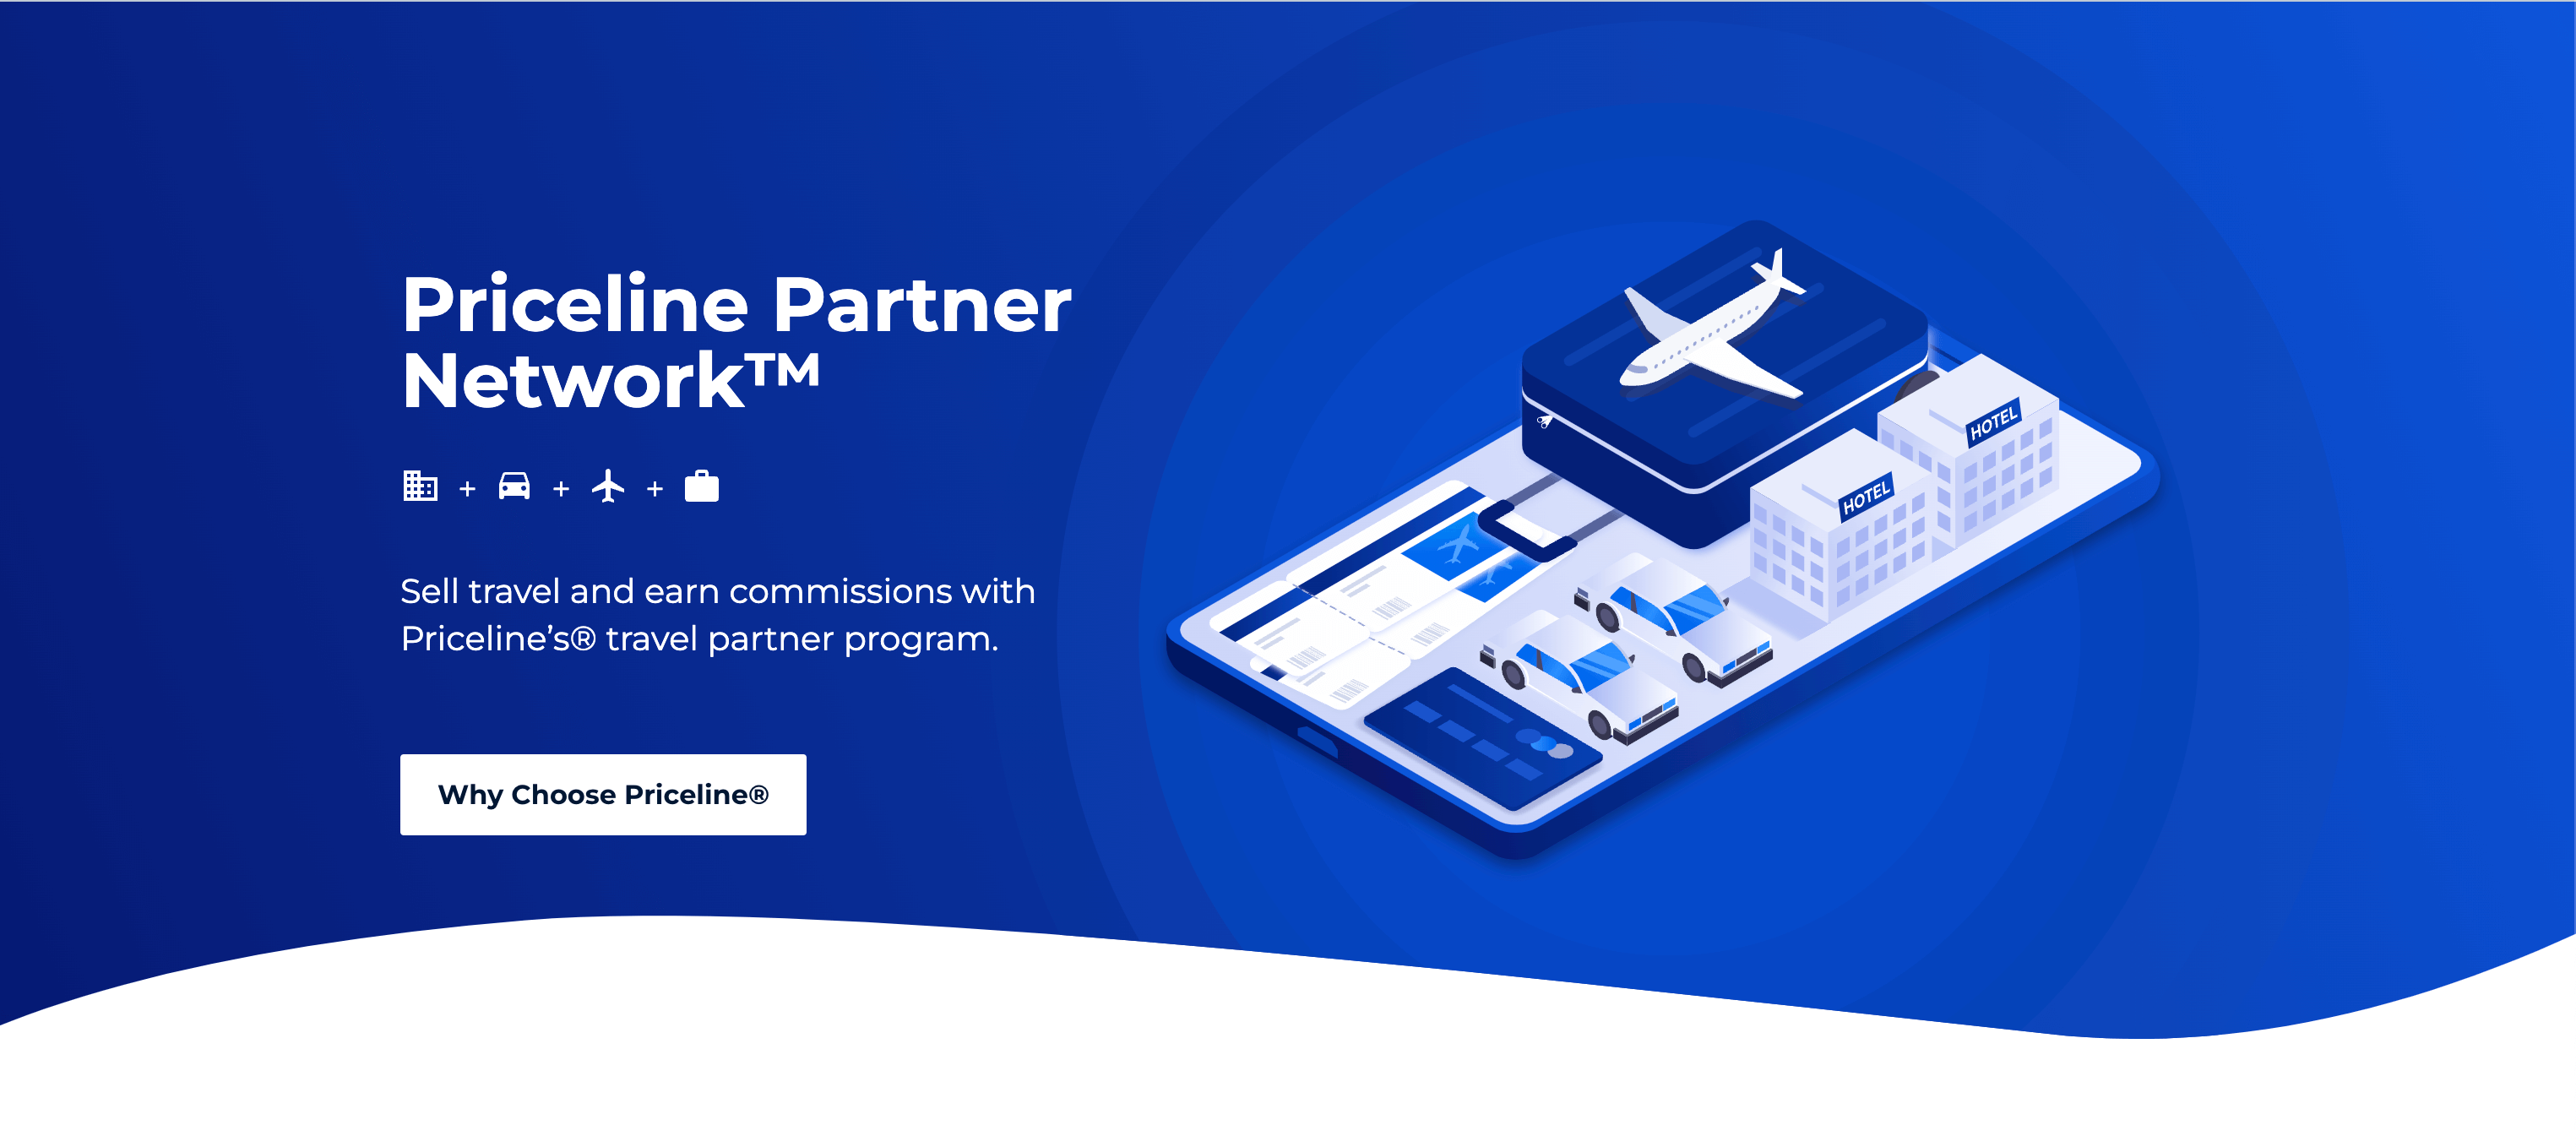 Priceline Partner Network's homepage